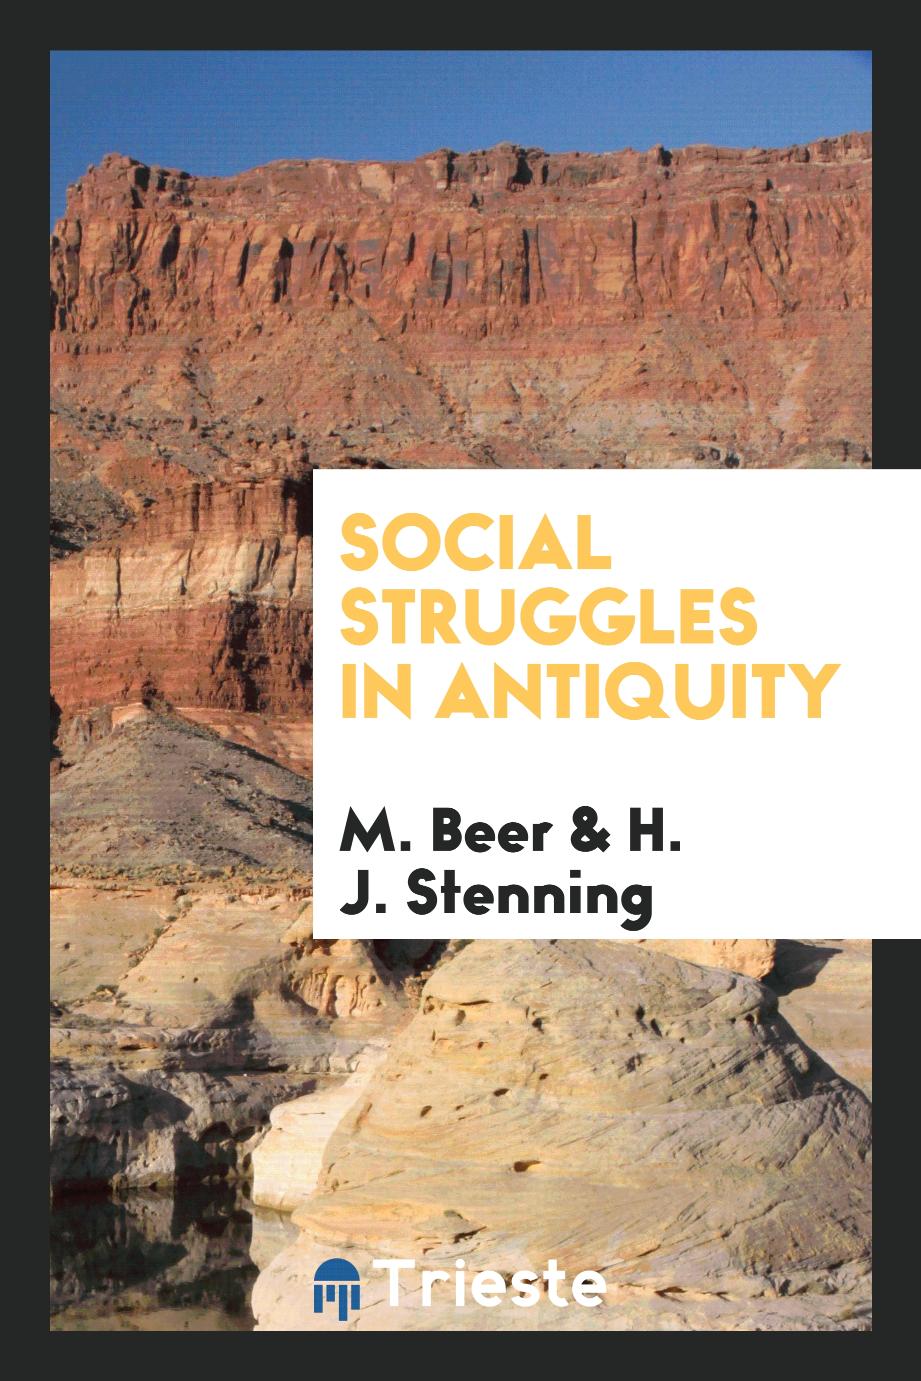 Social struggles in antiquity